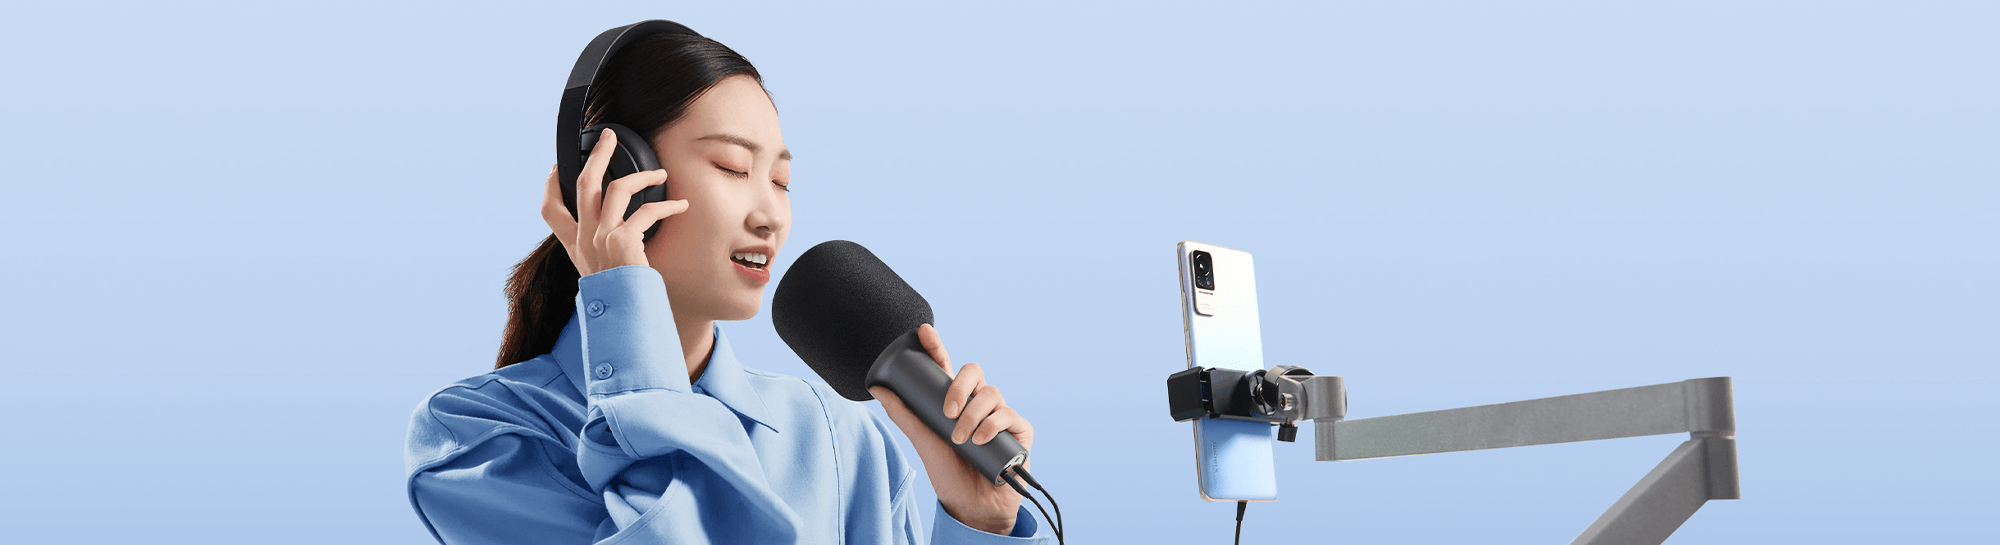 Karaoke z Xiaomi Mijia K